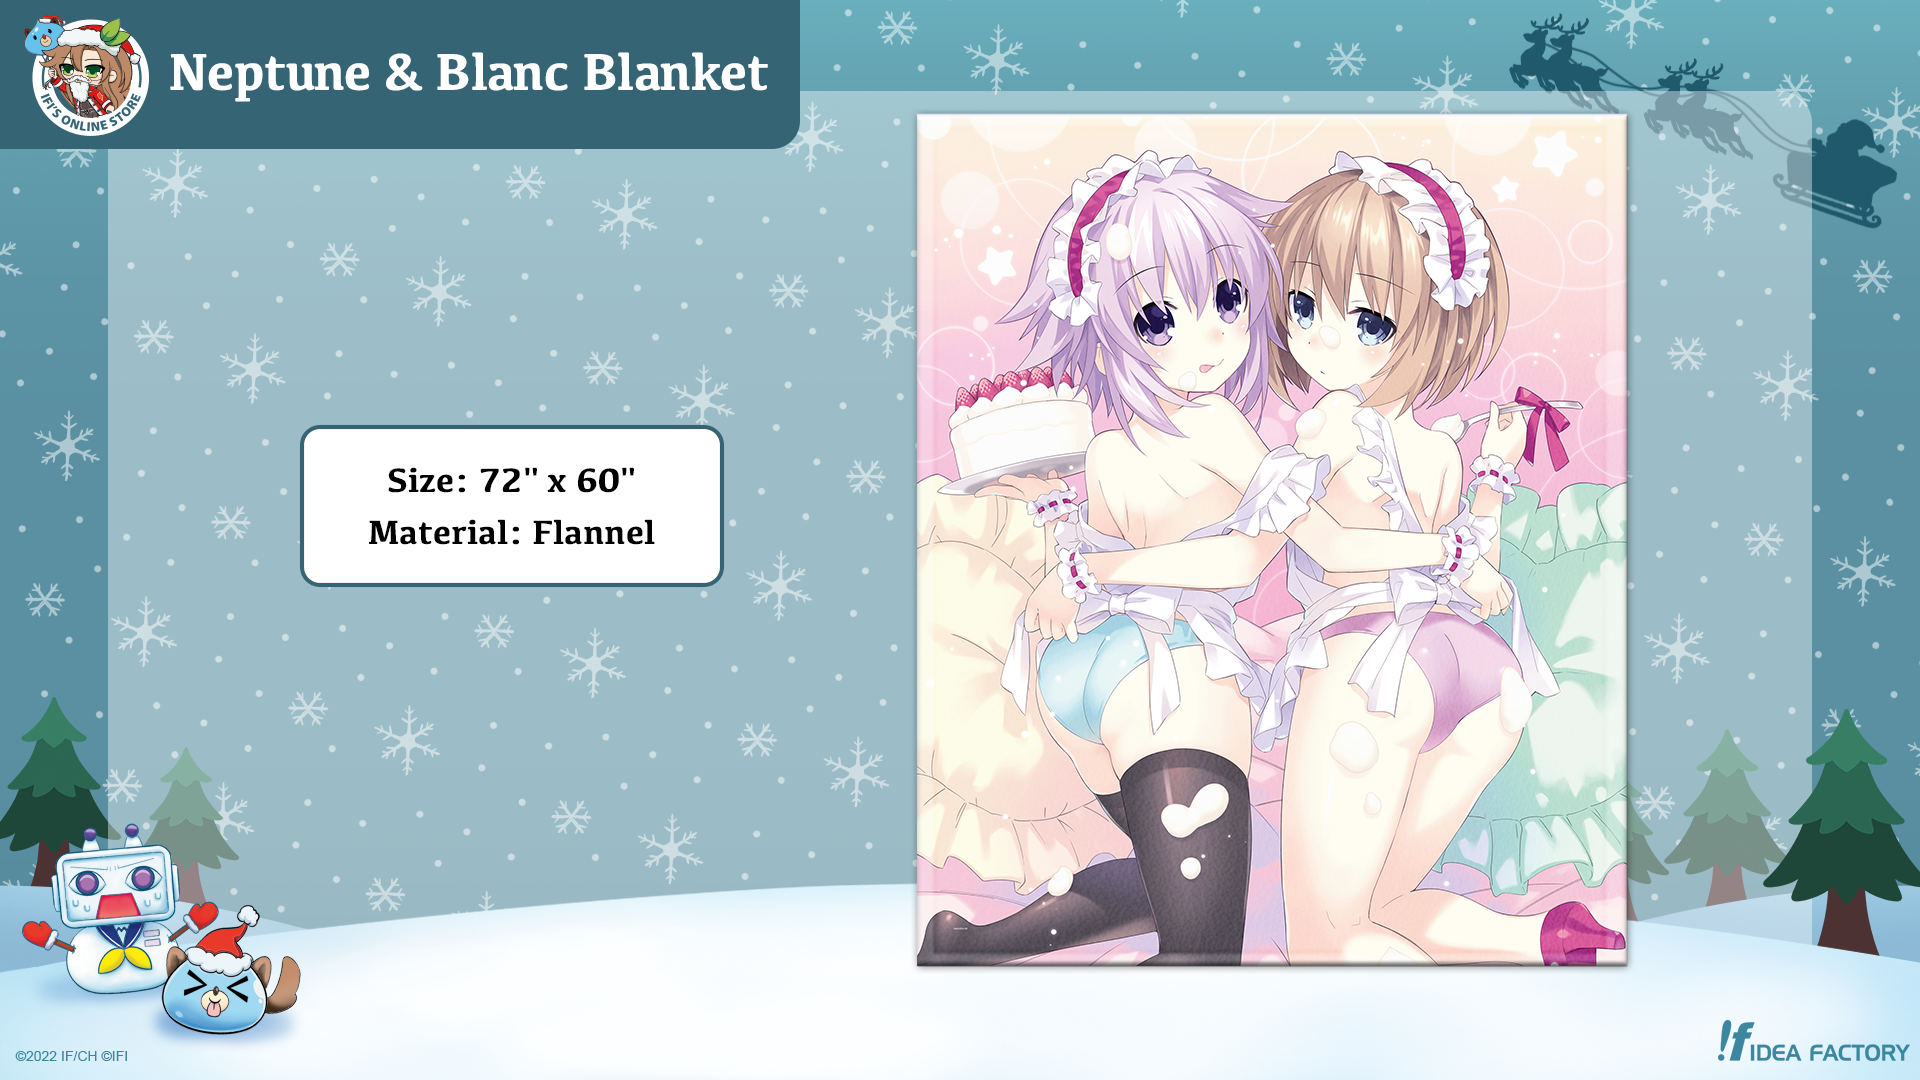 Neptune and Blanc Blanket